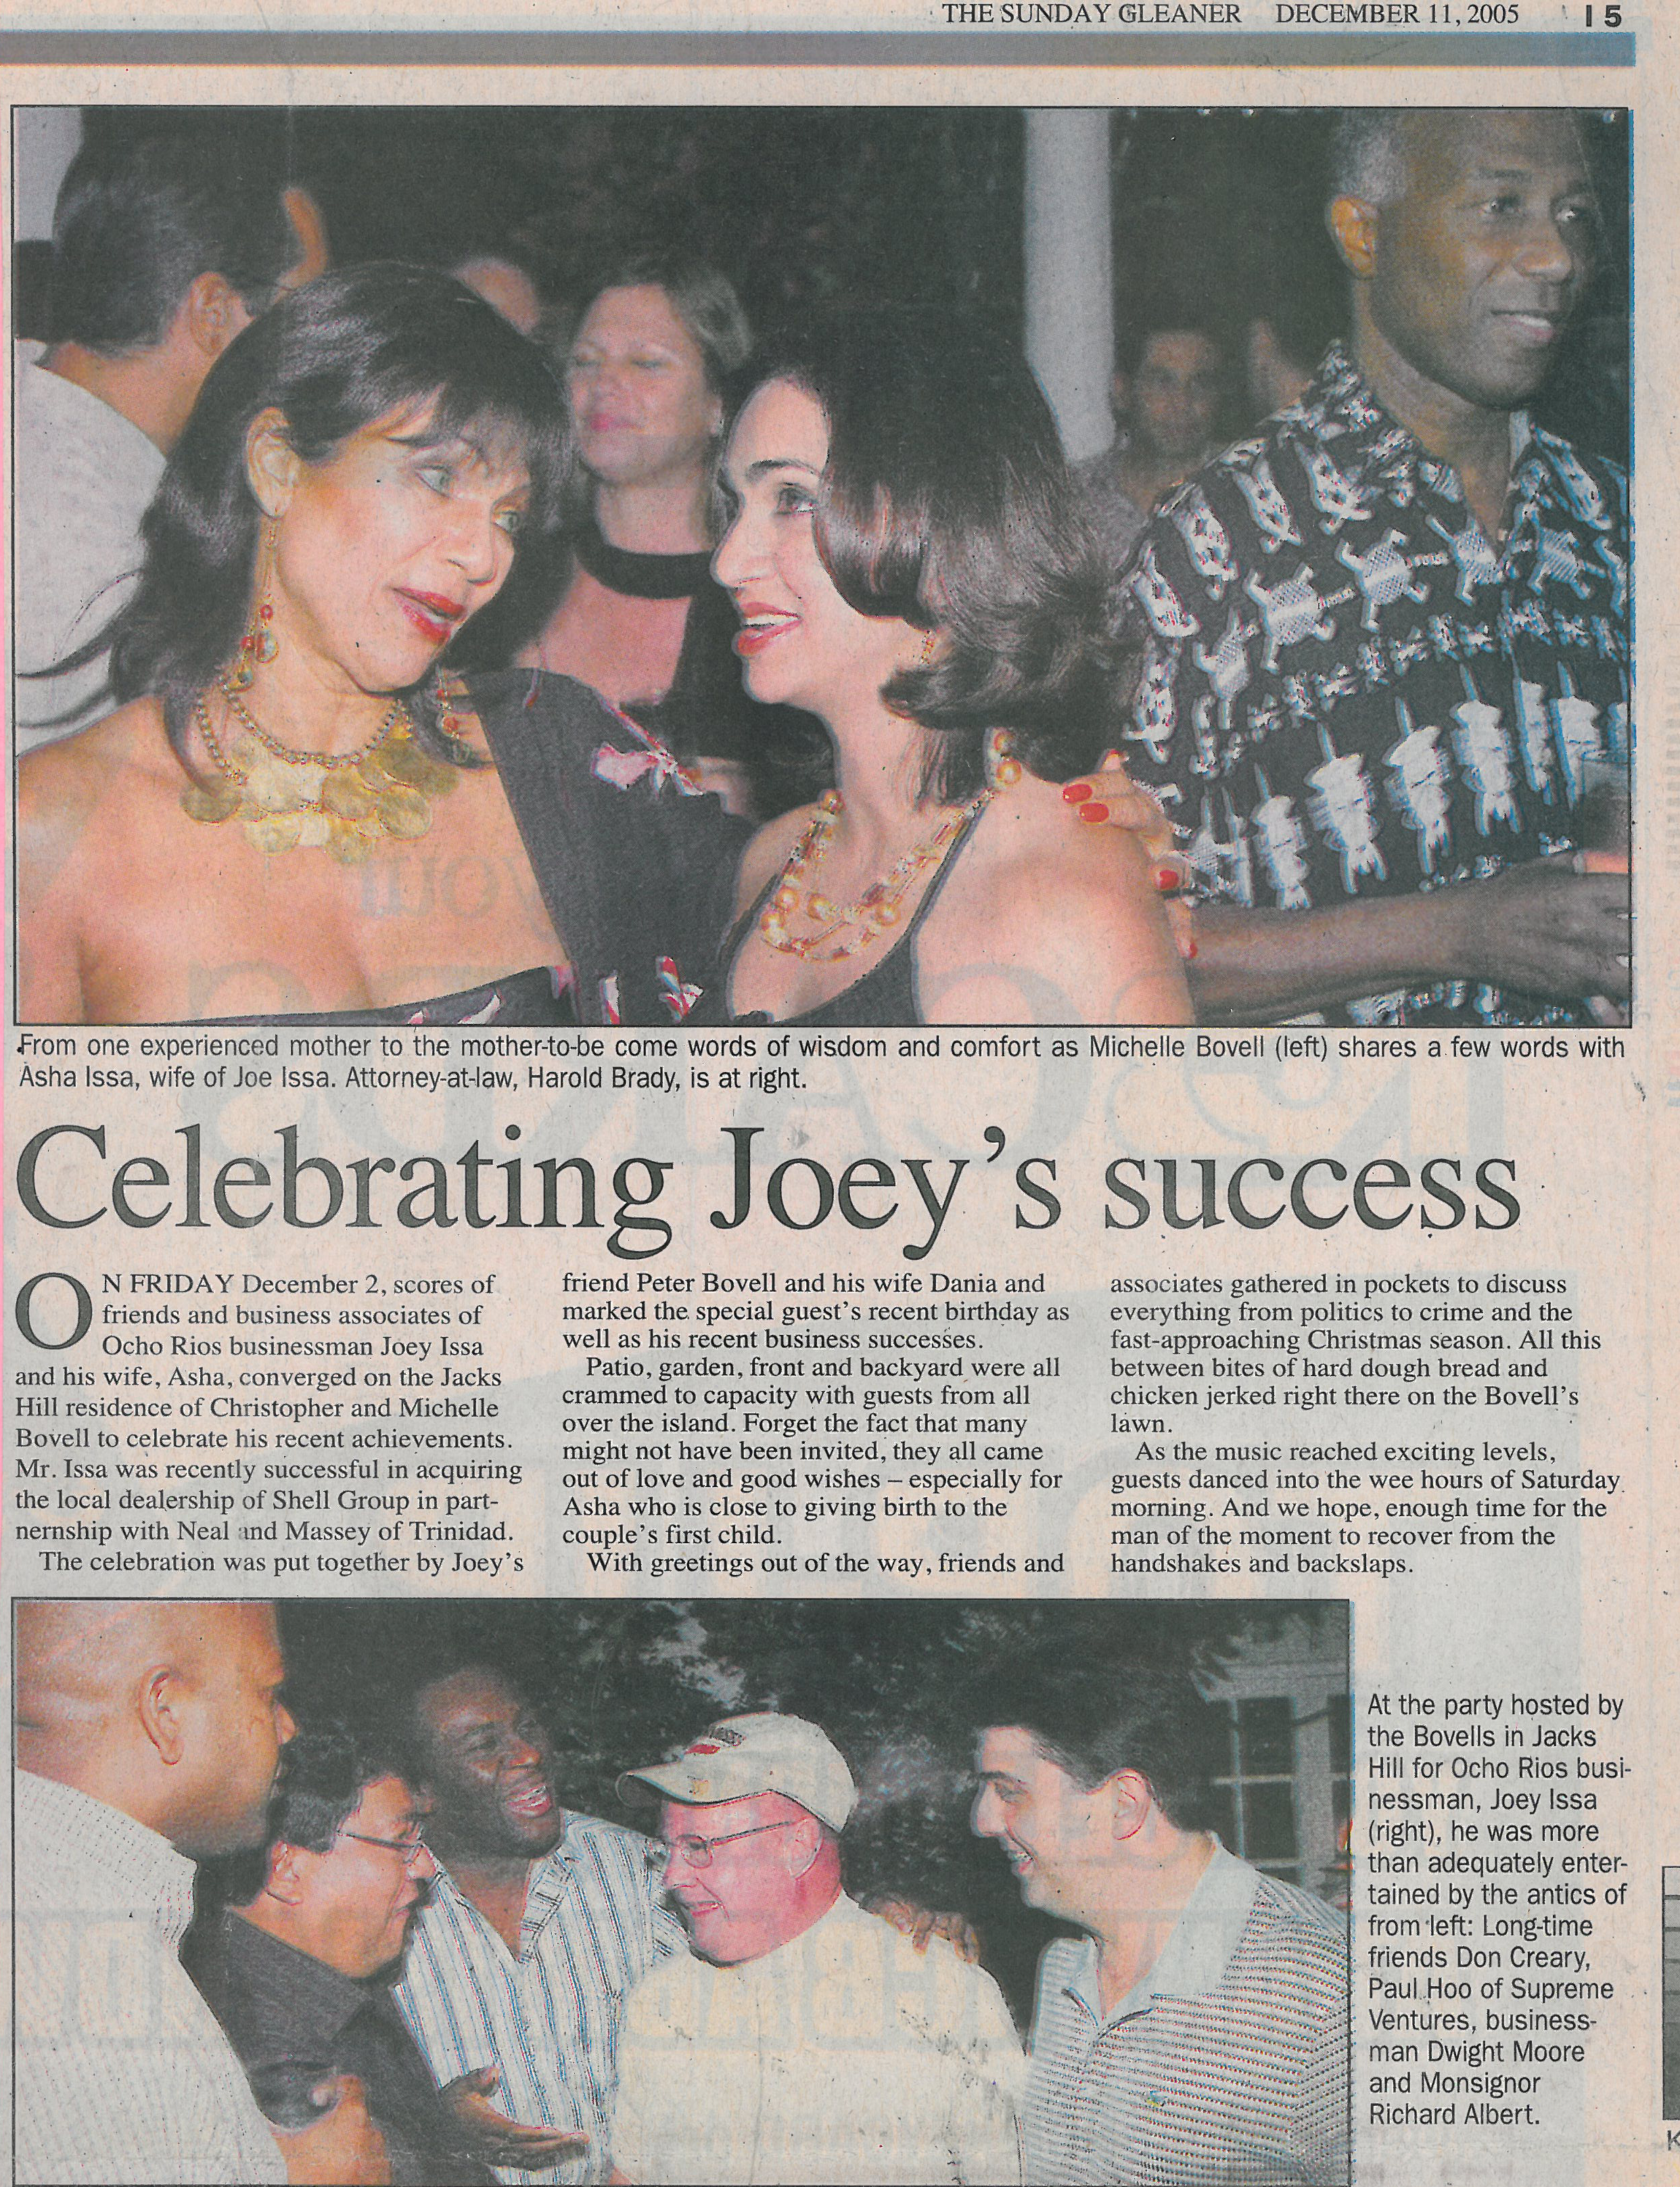 Celebrating Joey's Success